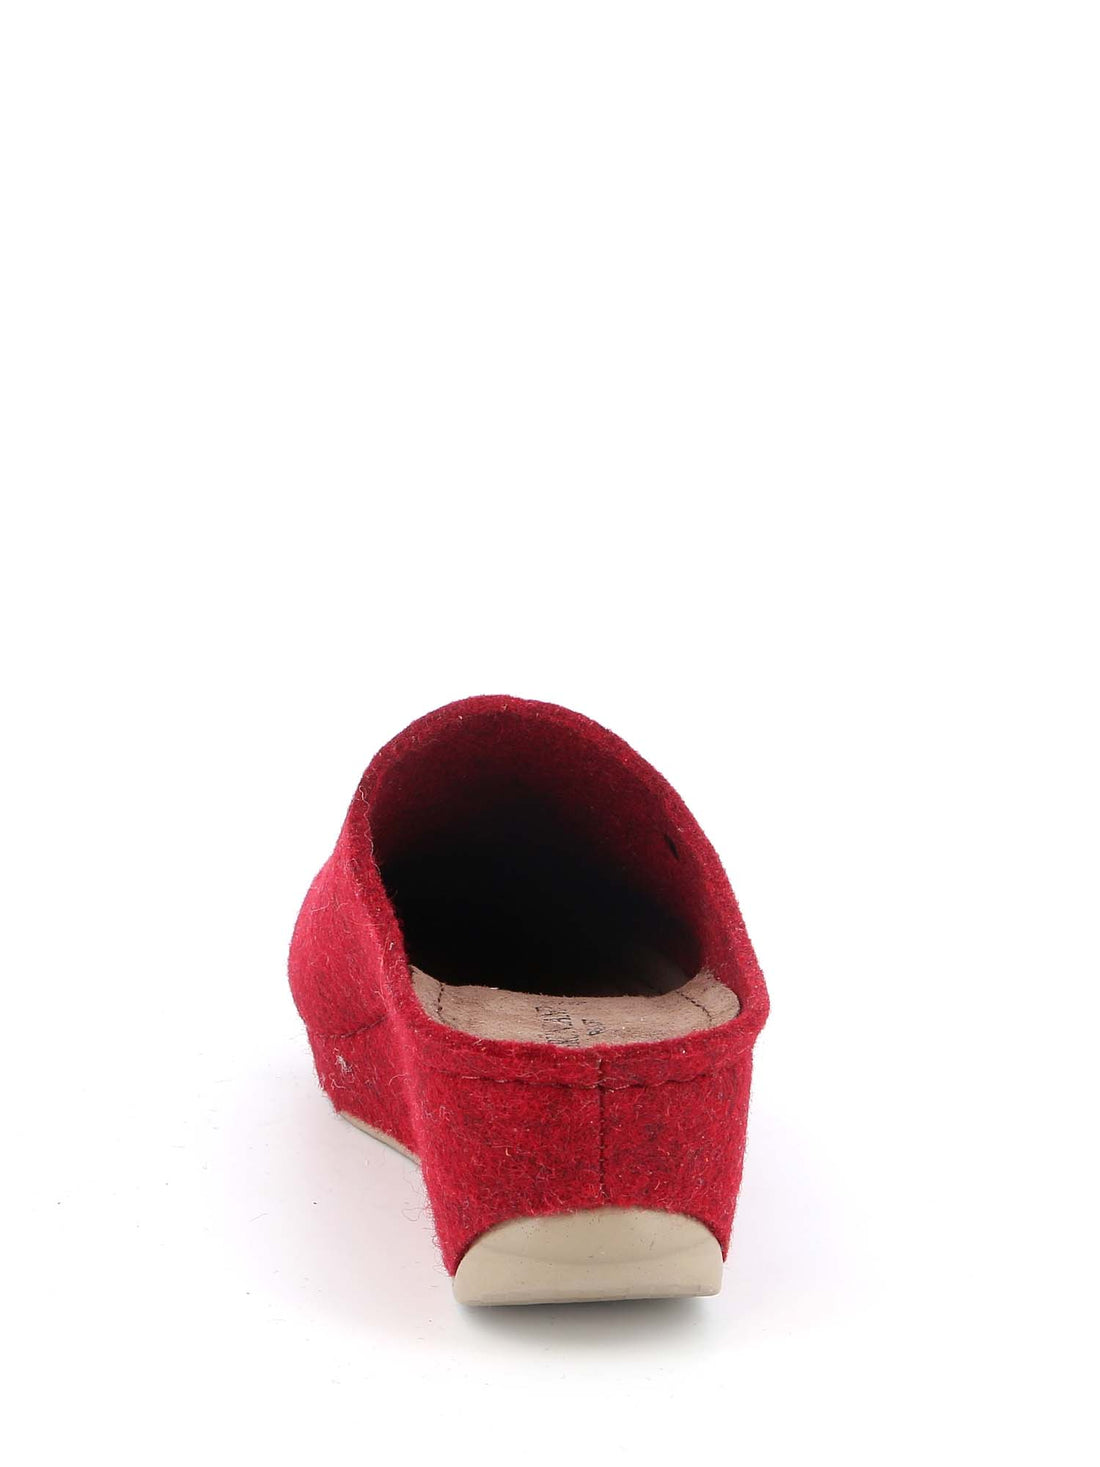 Pantofole Rosso Grunland